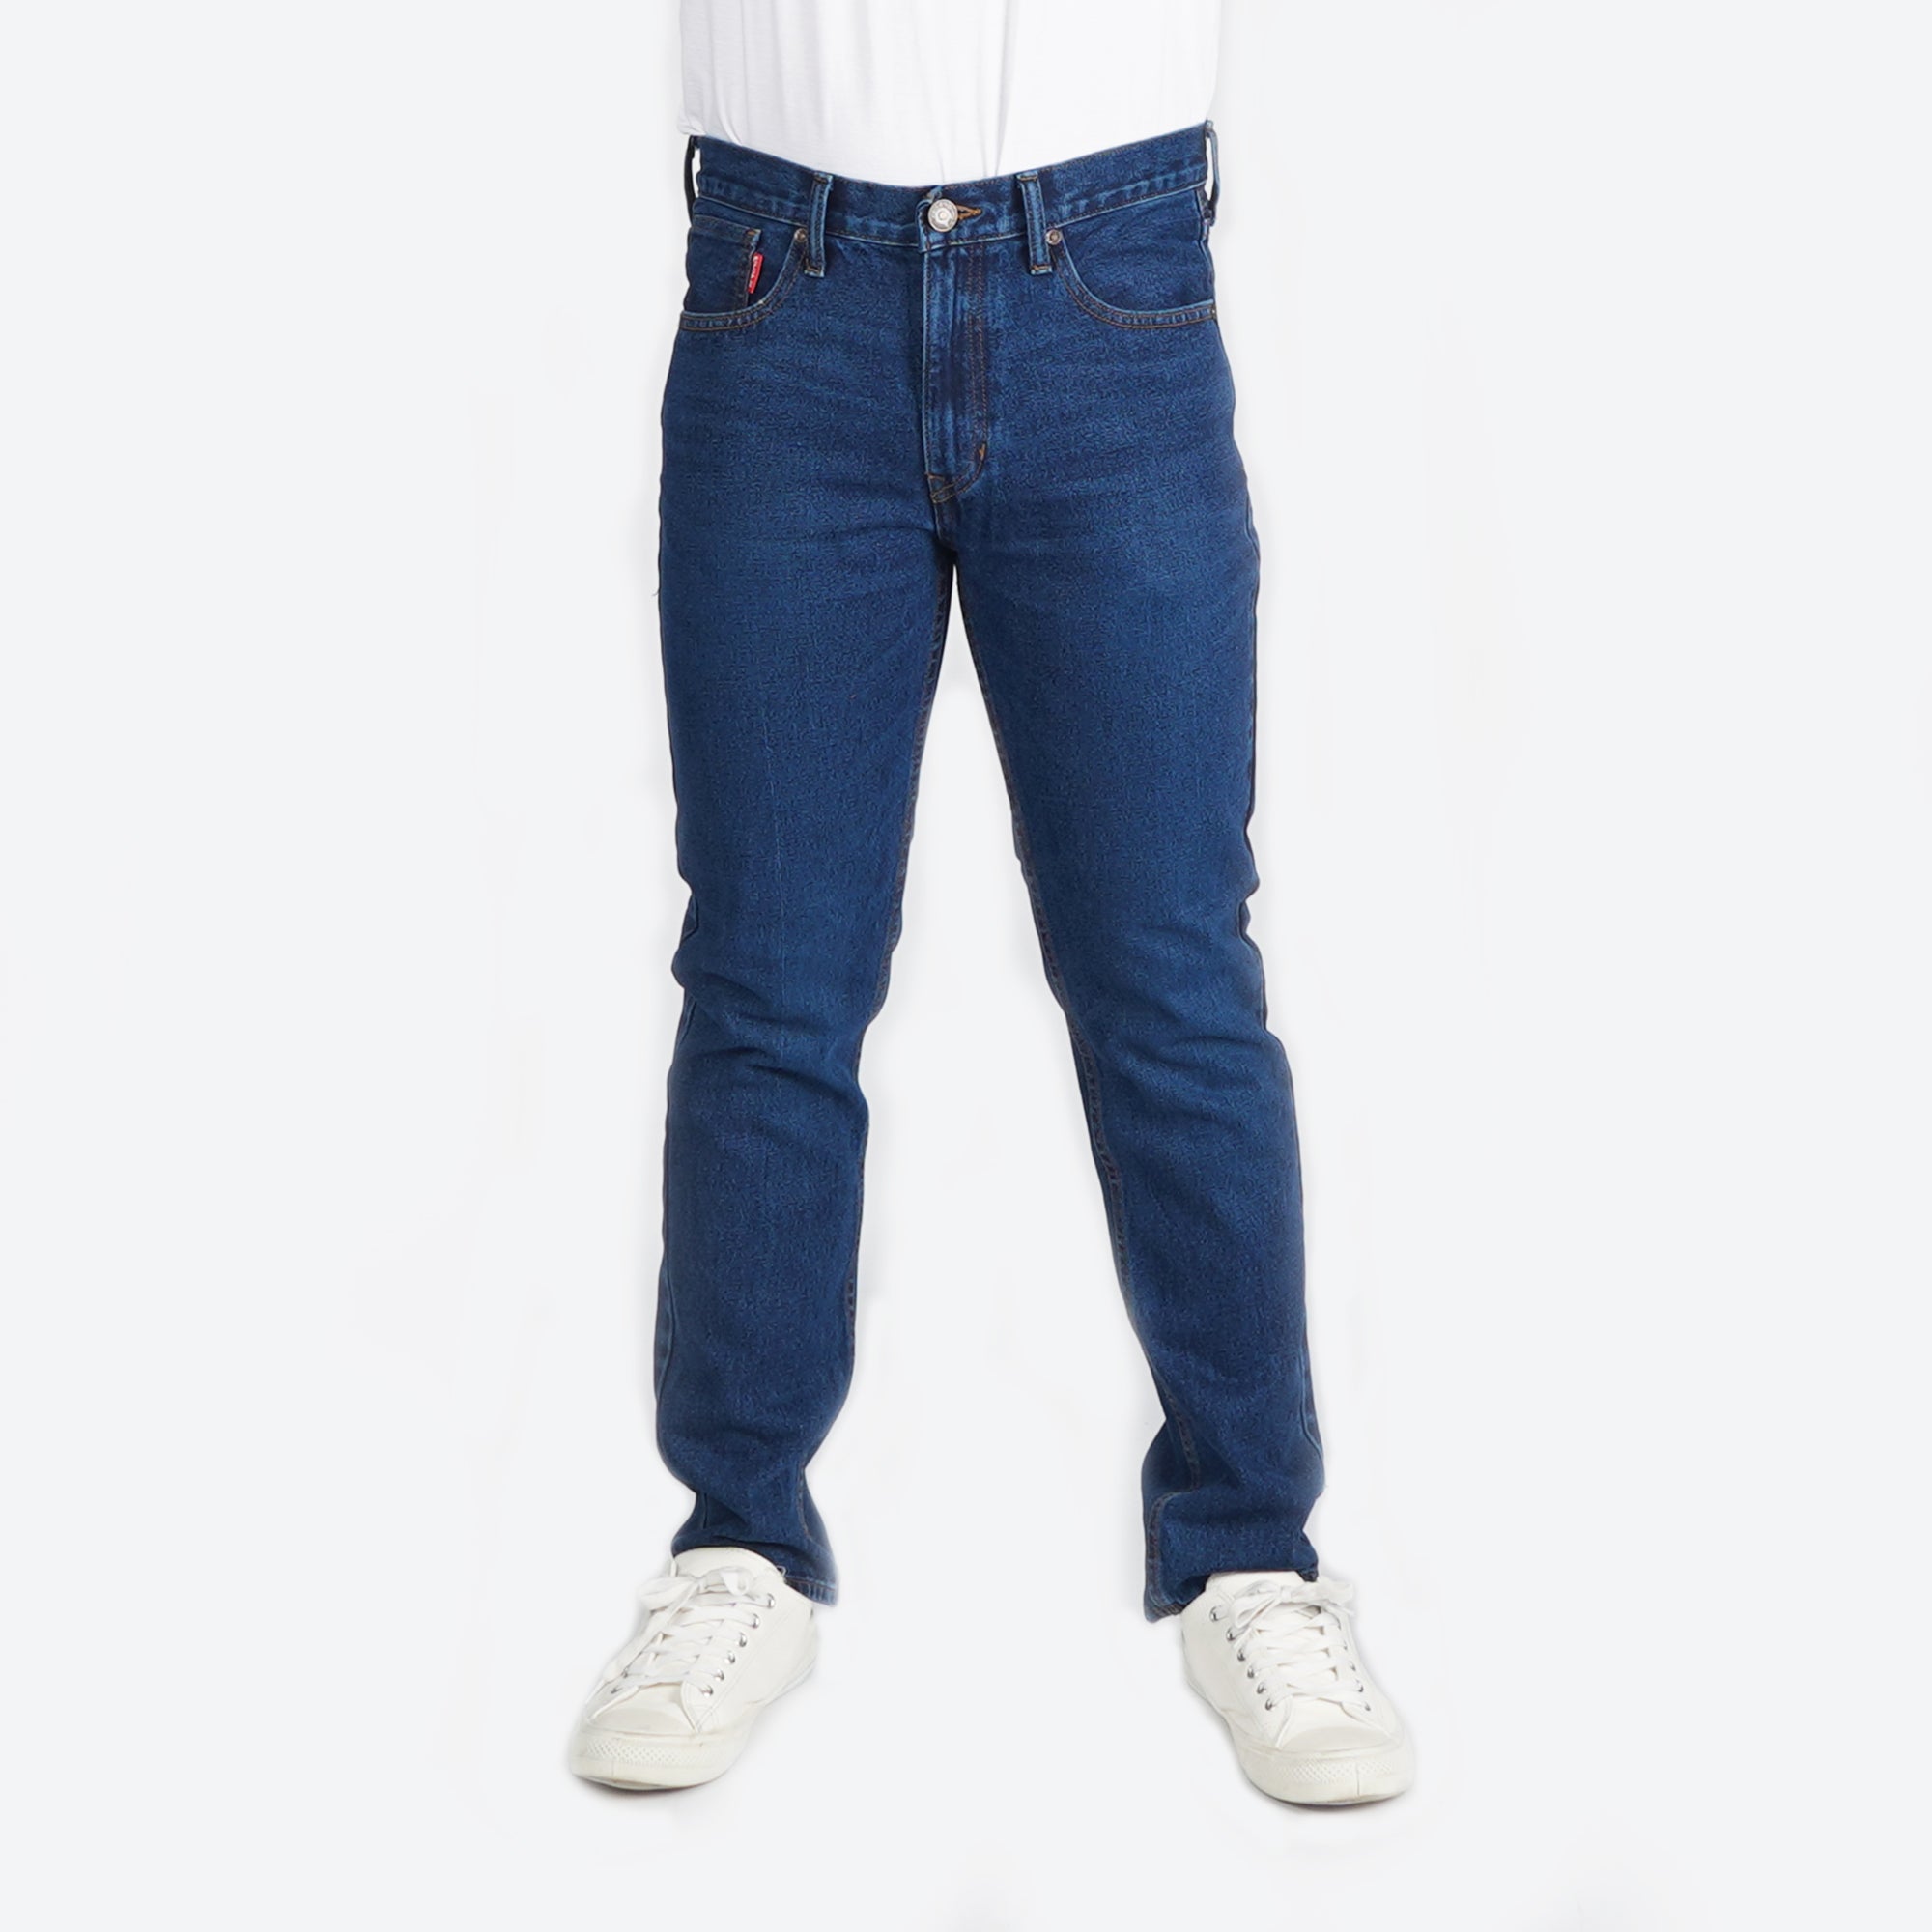 Bobson Japanese Men's Basic Denim Pants for Men Trendy Fashion High Quality Apparel Comfortable Casual Jeans for Men Skinny Mid Waist 153033 (Dark Shade)